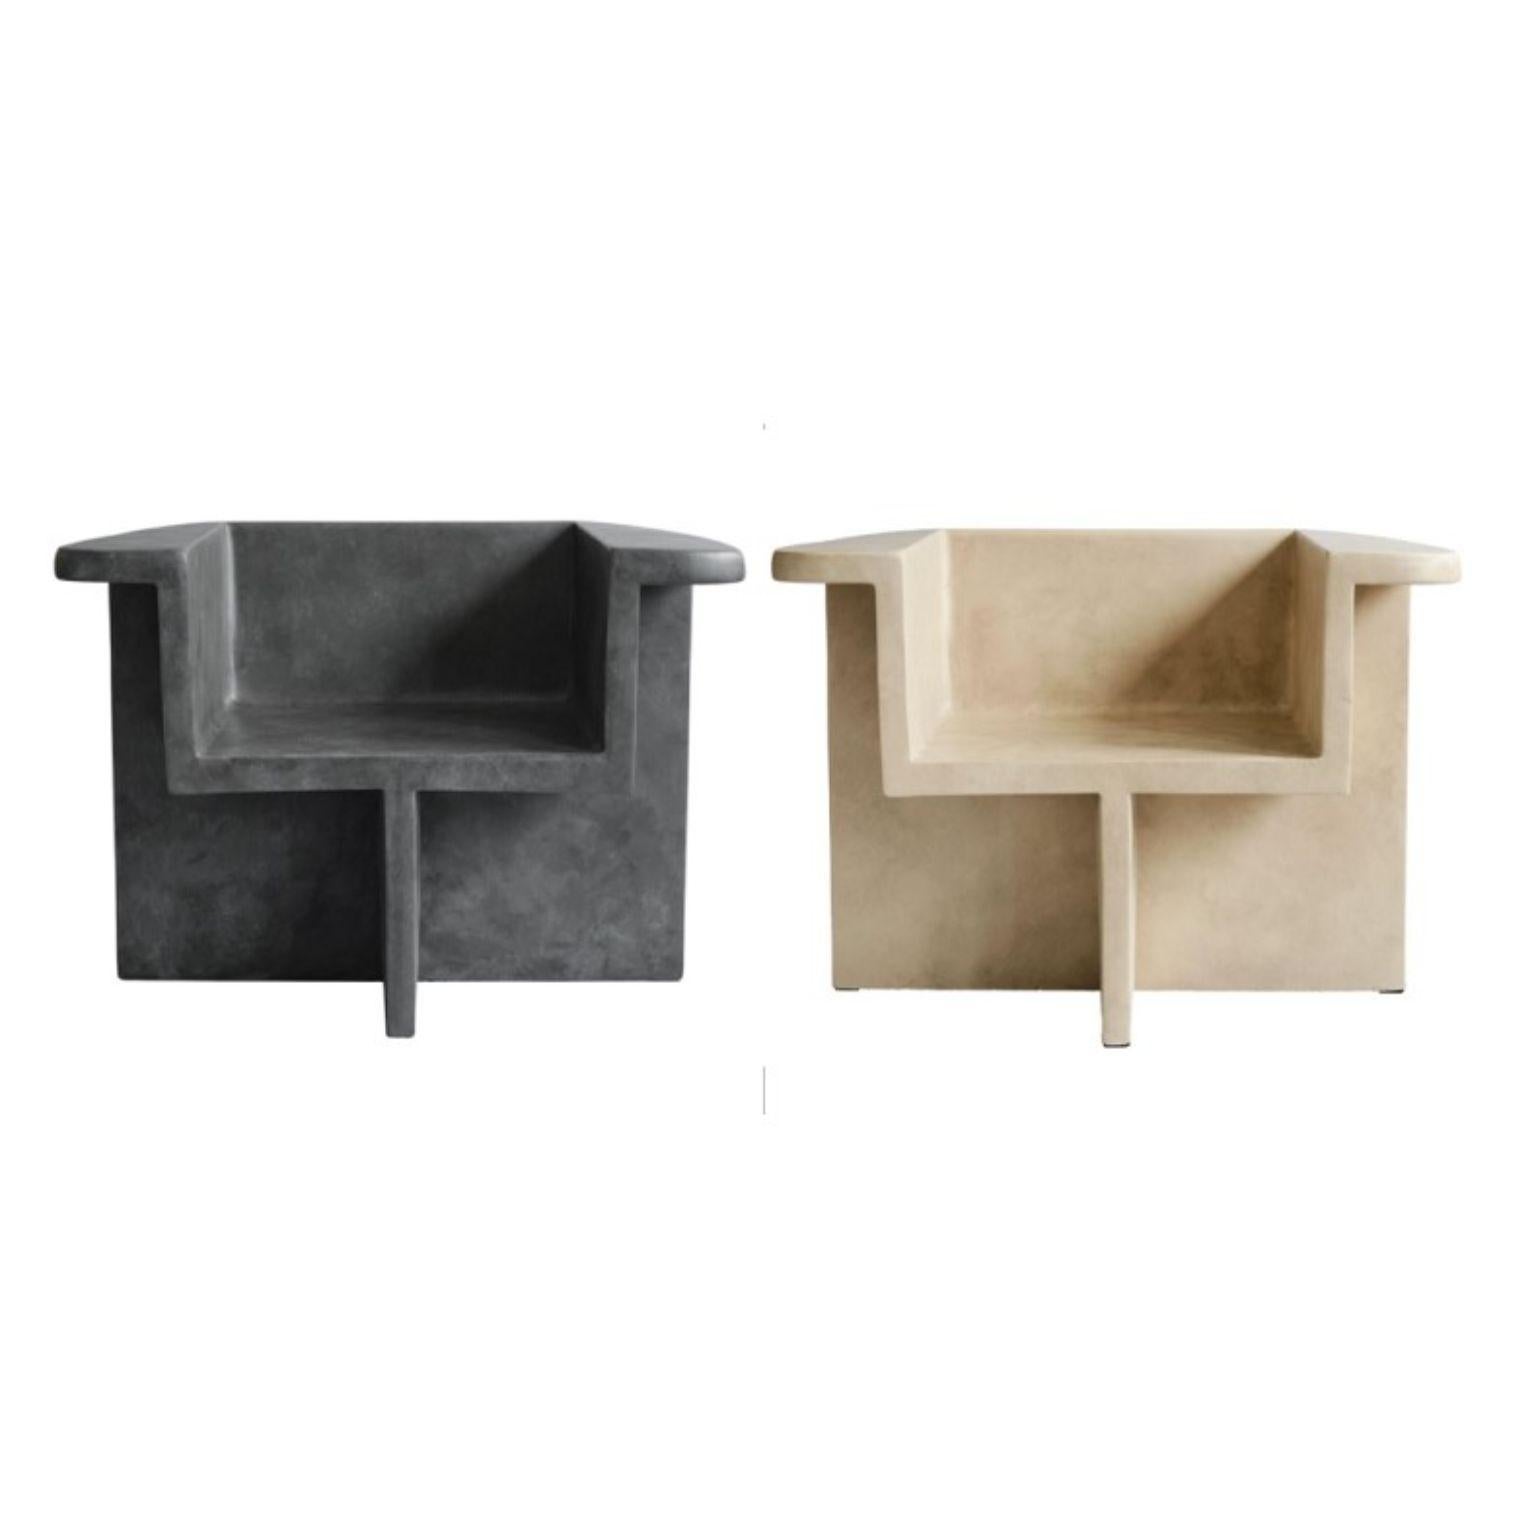 Set of 2 Brutus lounge chairs by 101 Copenhagen
Designed by Kristian Sofus Hansen & Tommy Hyldahl
Dimensions: L91 / W61 /H61 CM
Seat height: 38 CM / Seat depth: 48 CM
Backrest height: 28 CM
Materials: Fiber Concrete

Brutus Lounge Chair Cushion -